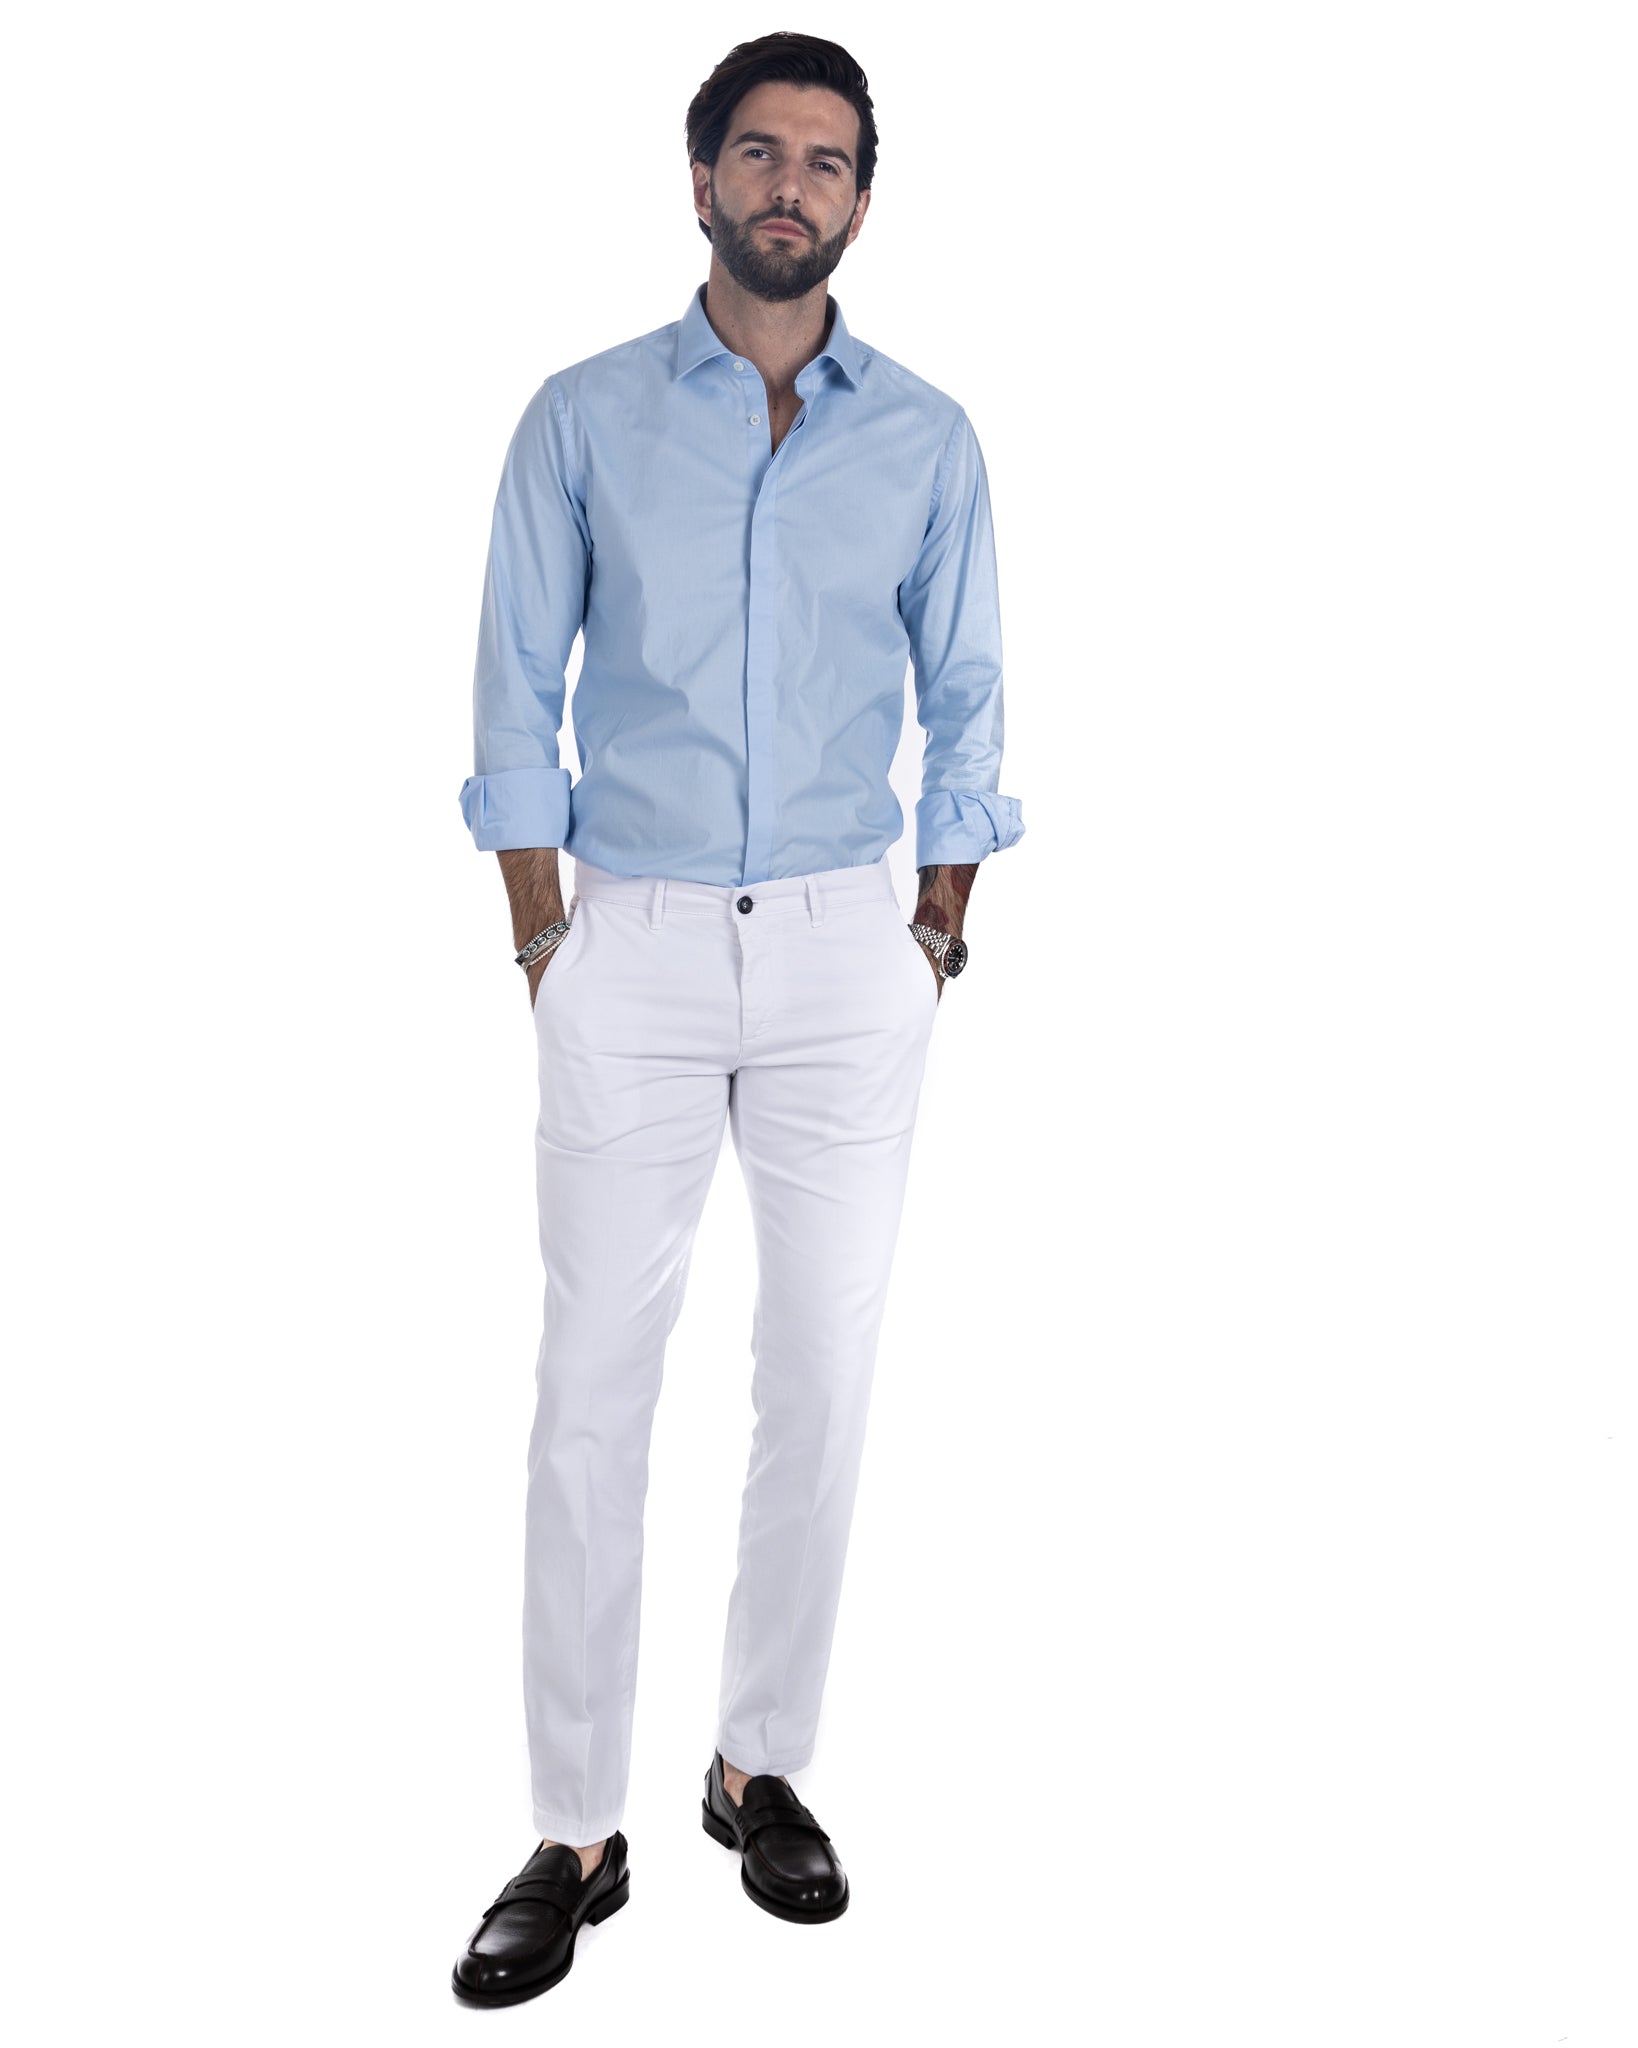 Shirt - classic light blue basic in cotton